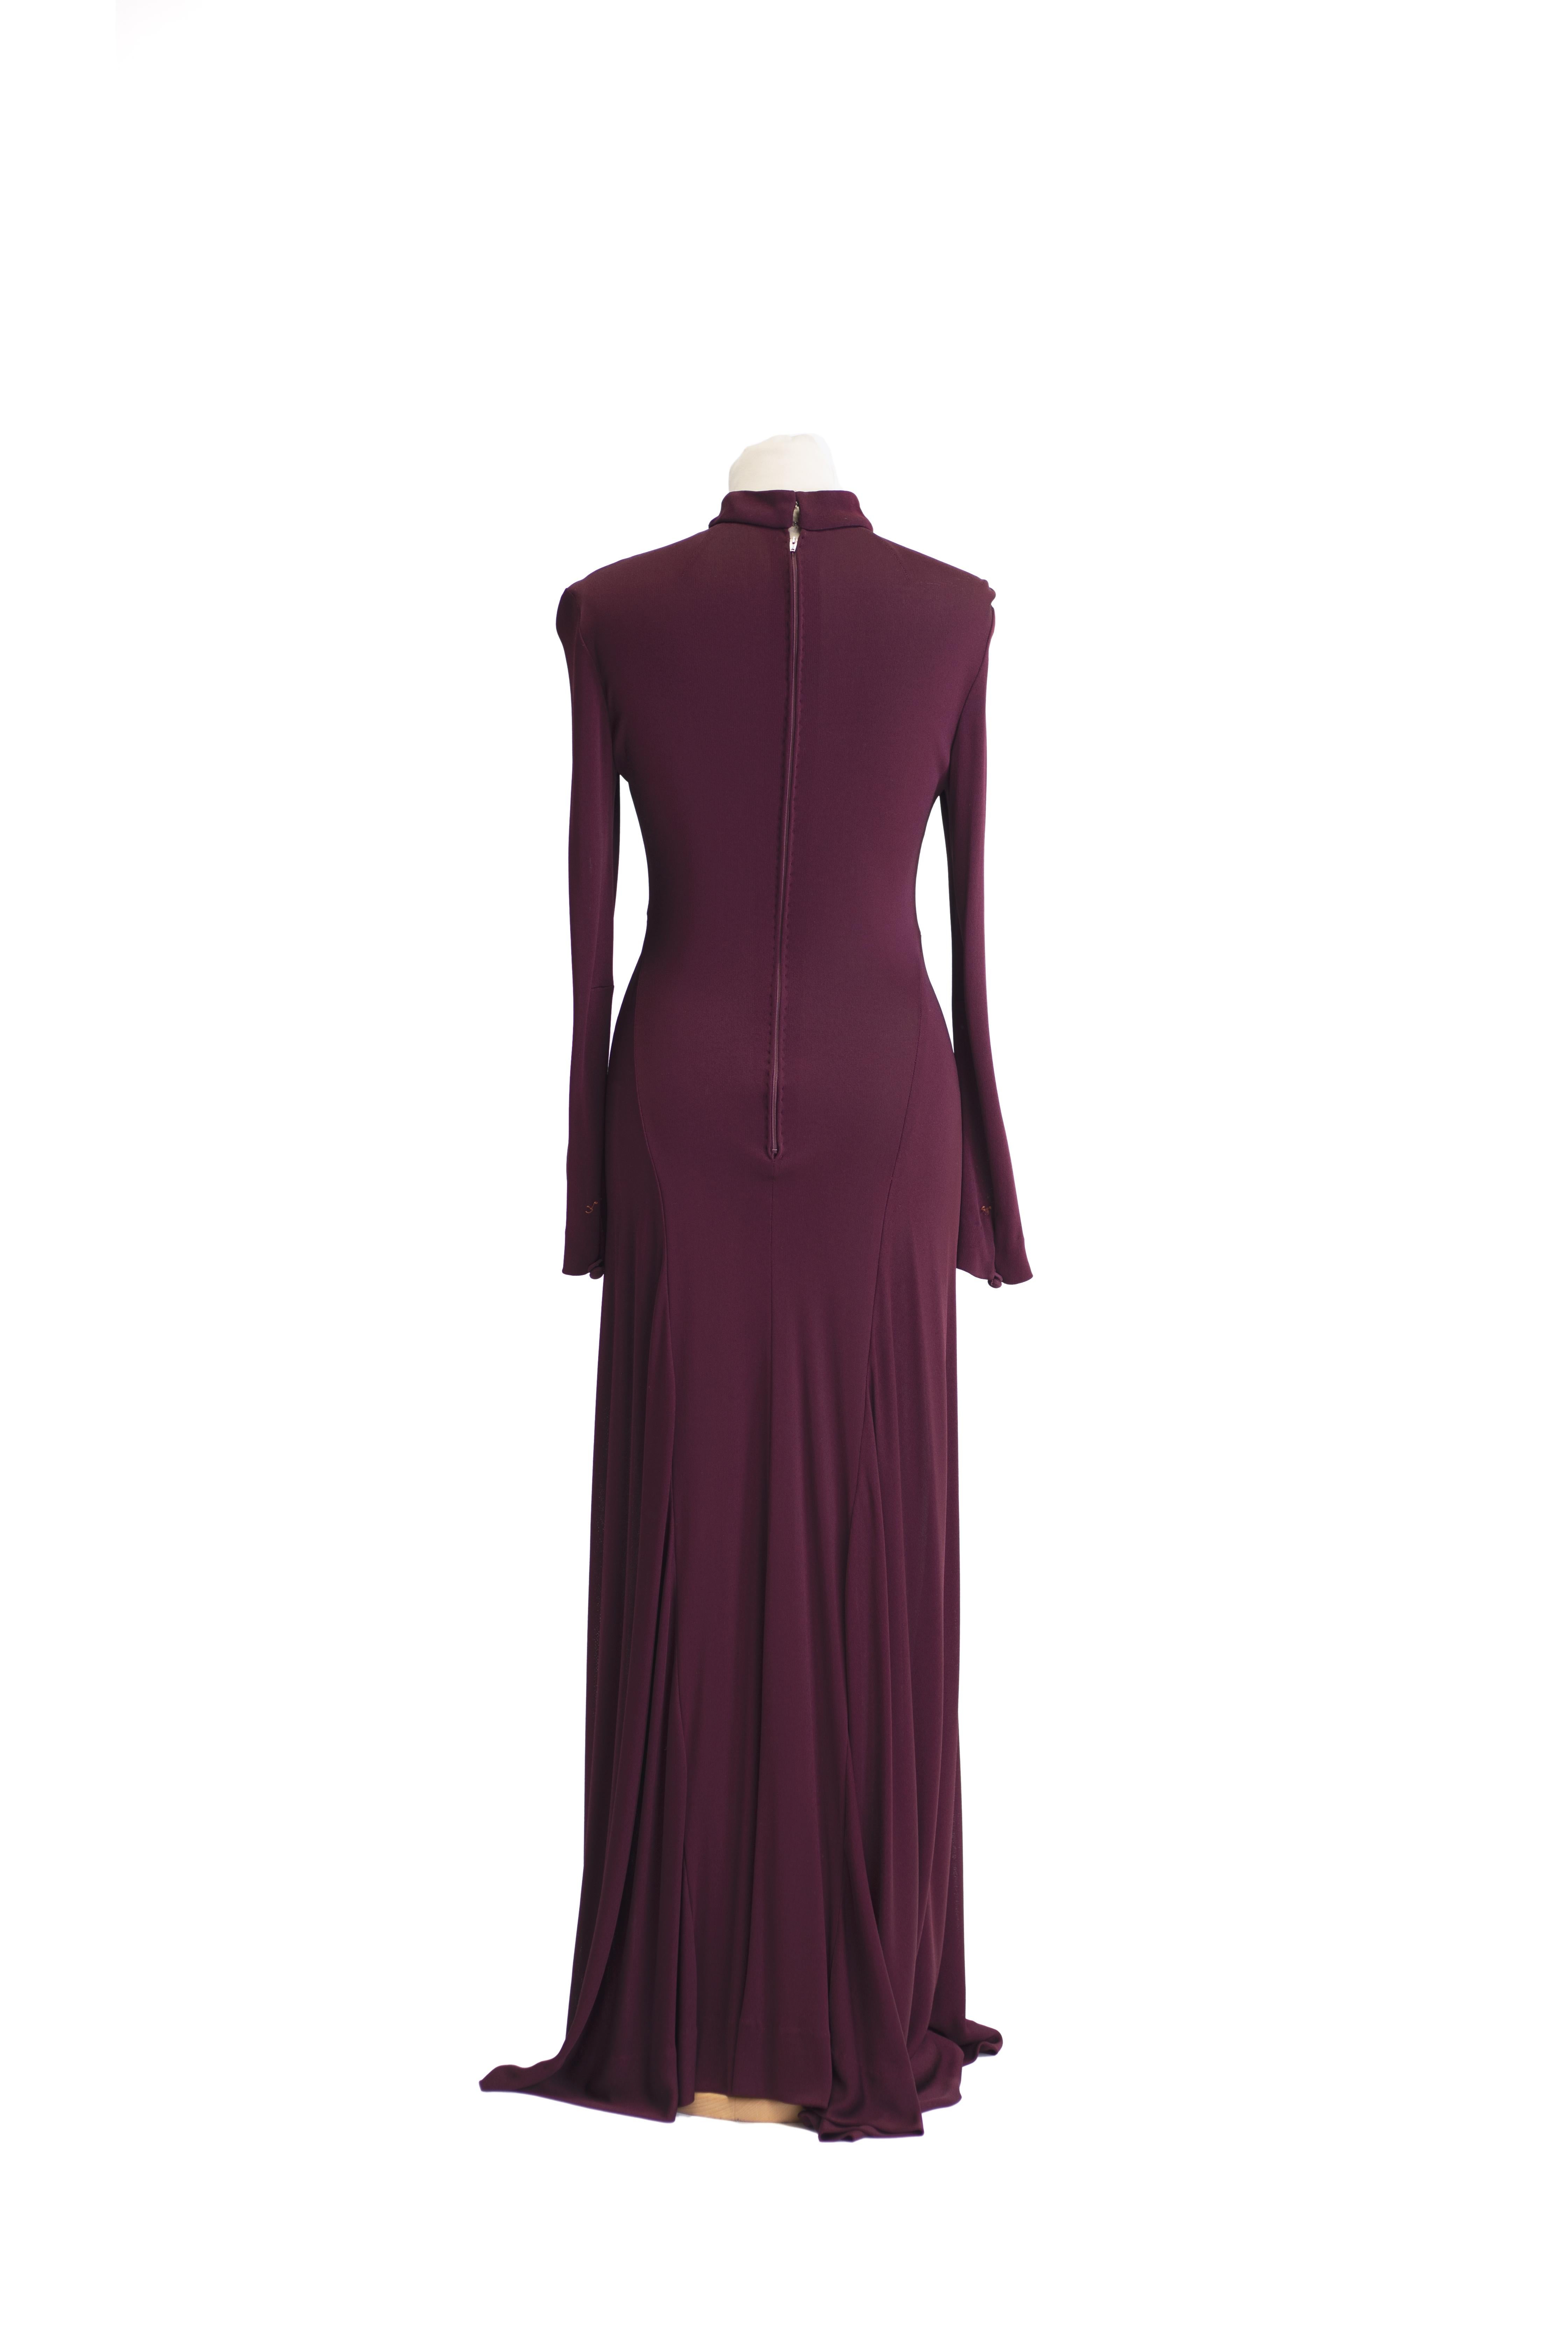 Women's 1970s Dominic Rompollo Long plum dress For Sale